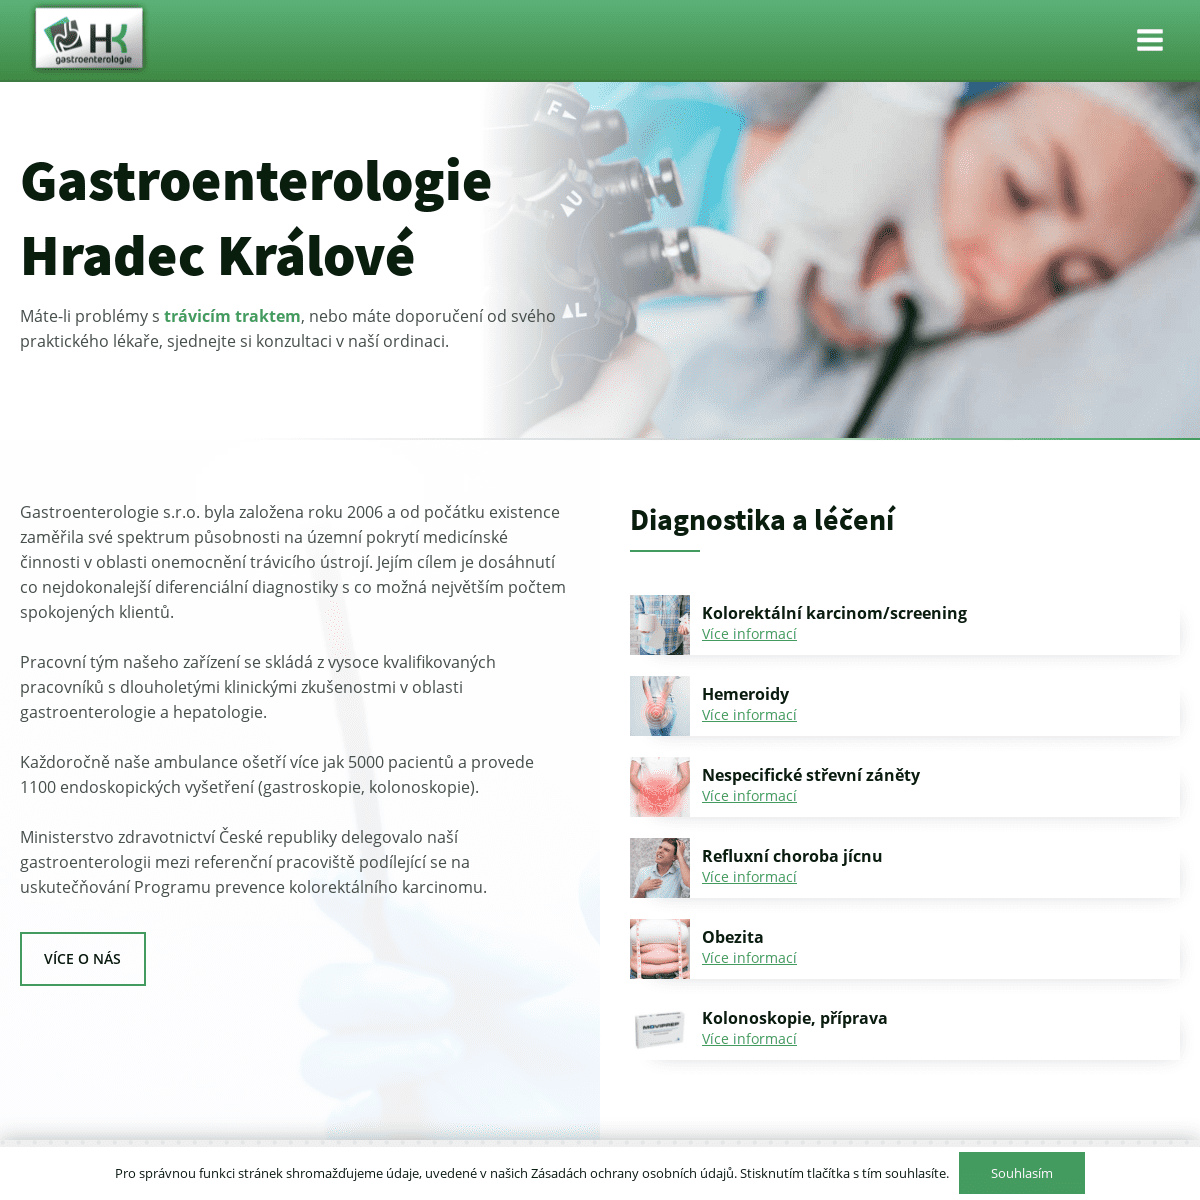 A complete backup of https://gastroenterologie-hk.cz